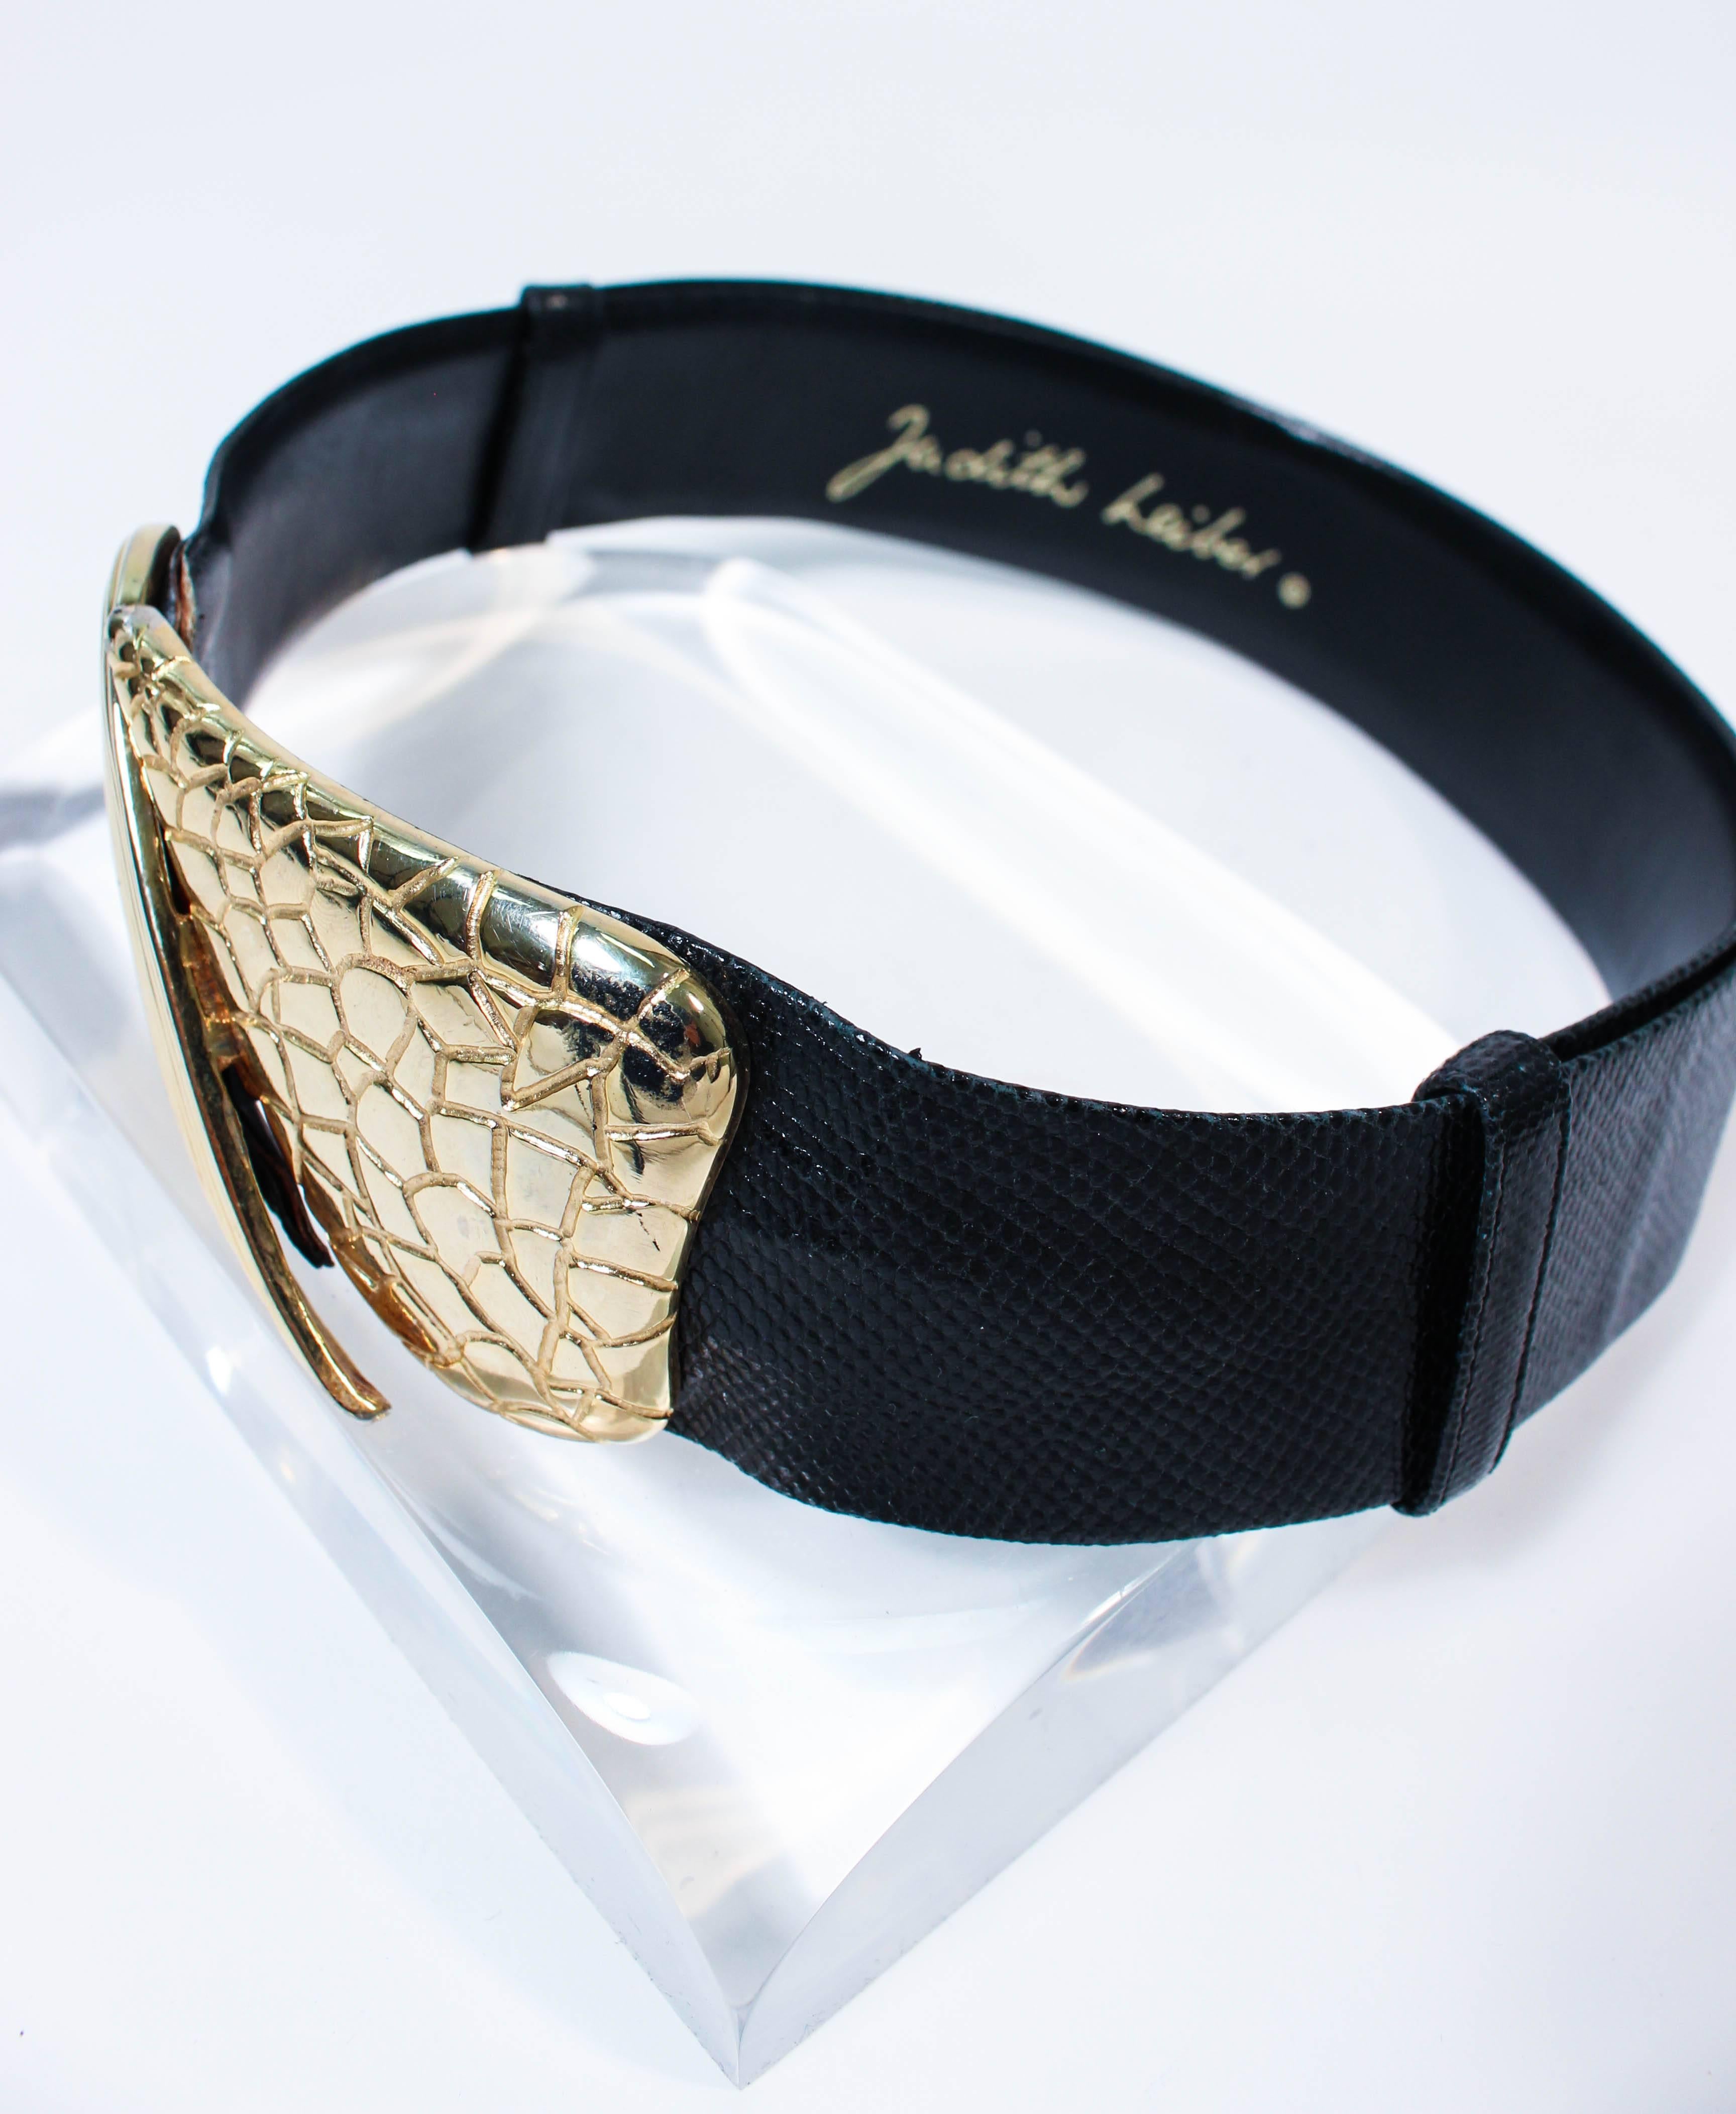 black belt with large gold buckle